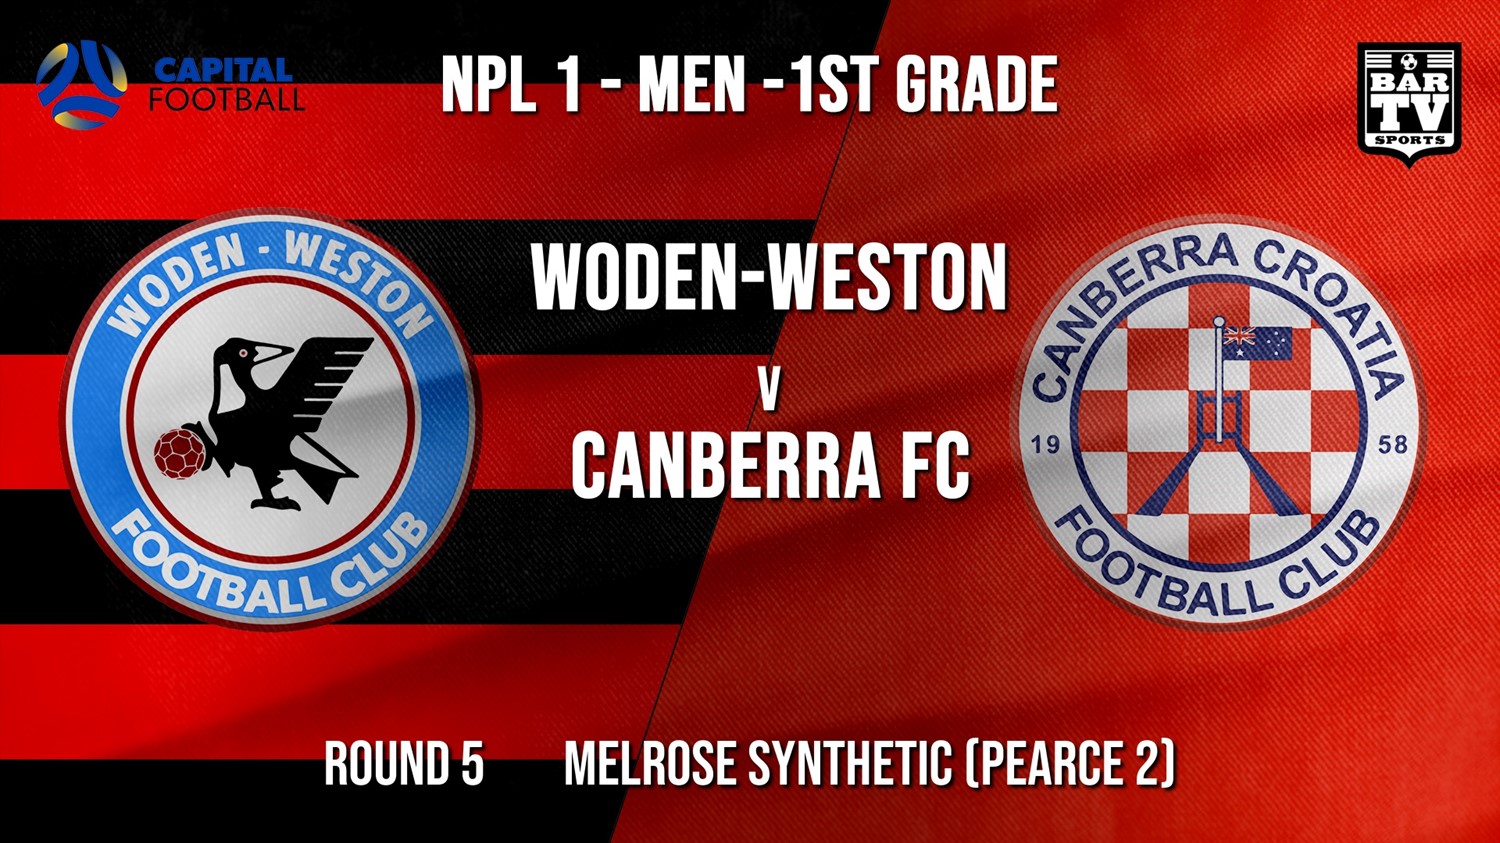 NPL - CAPITAL Round 5 - Woden-Weston FC v Canberra FC Minigame Slate Image